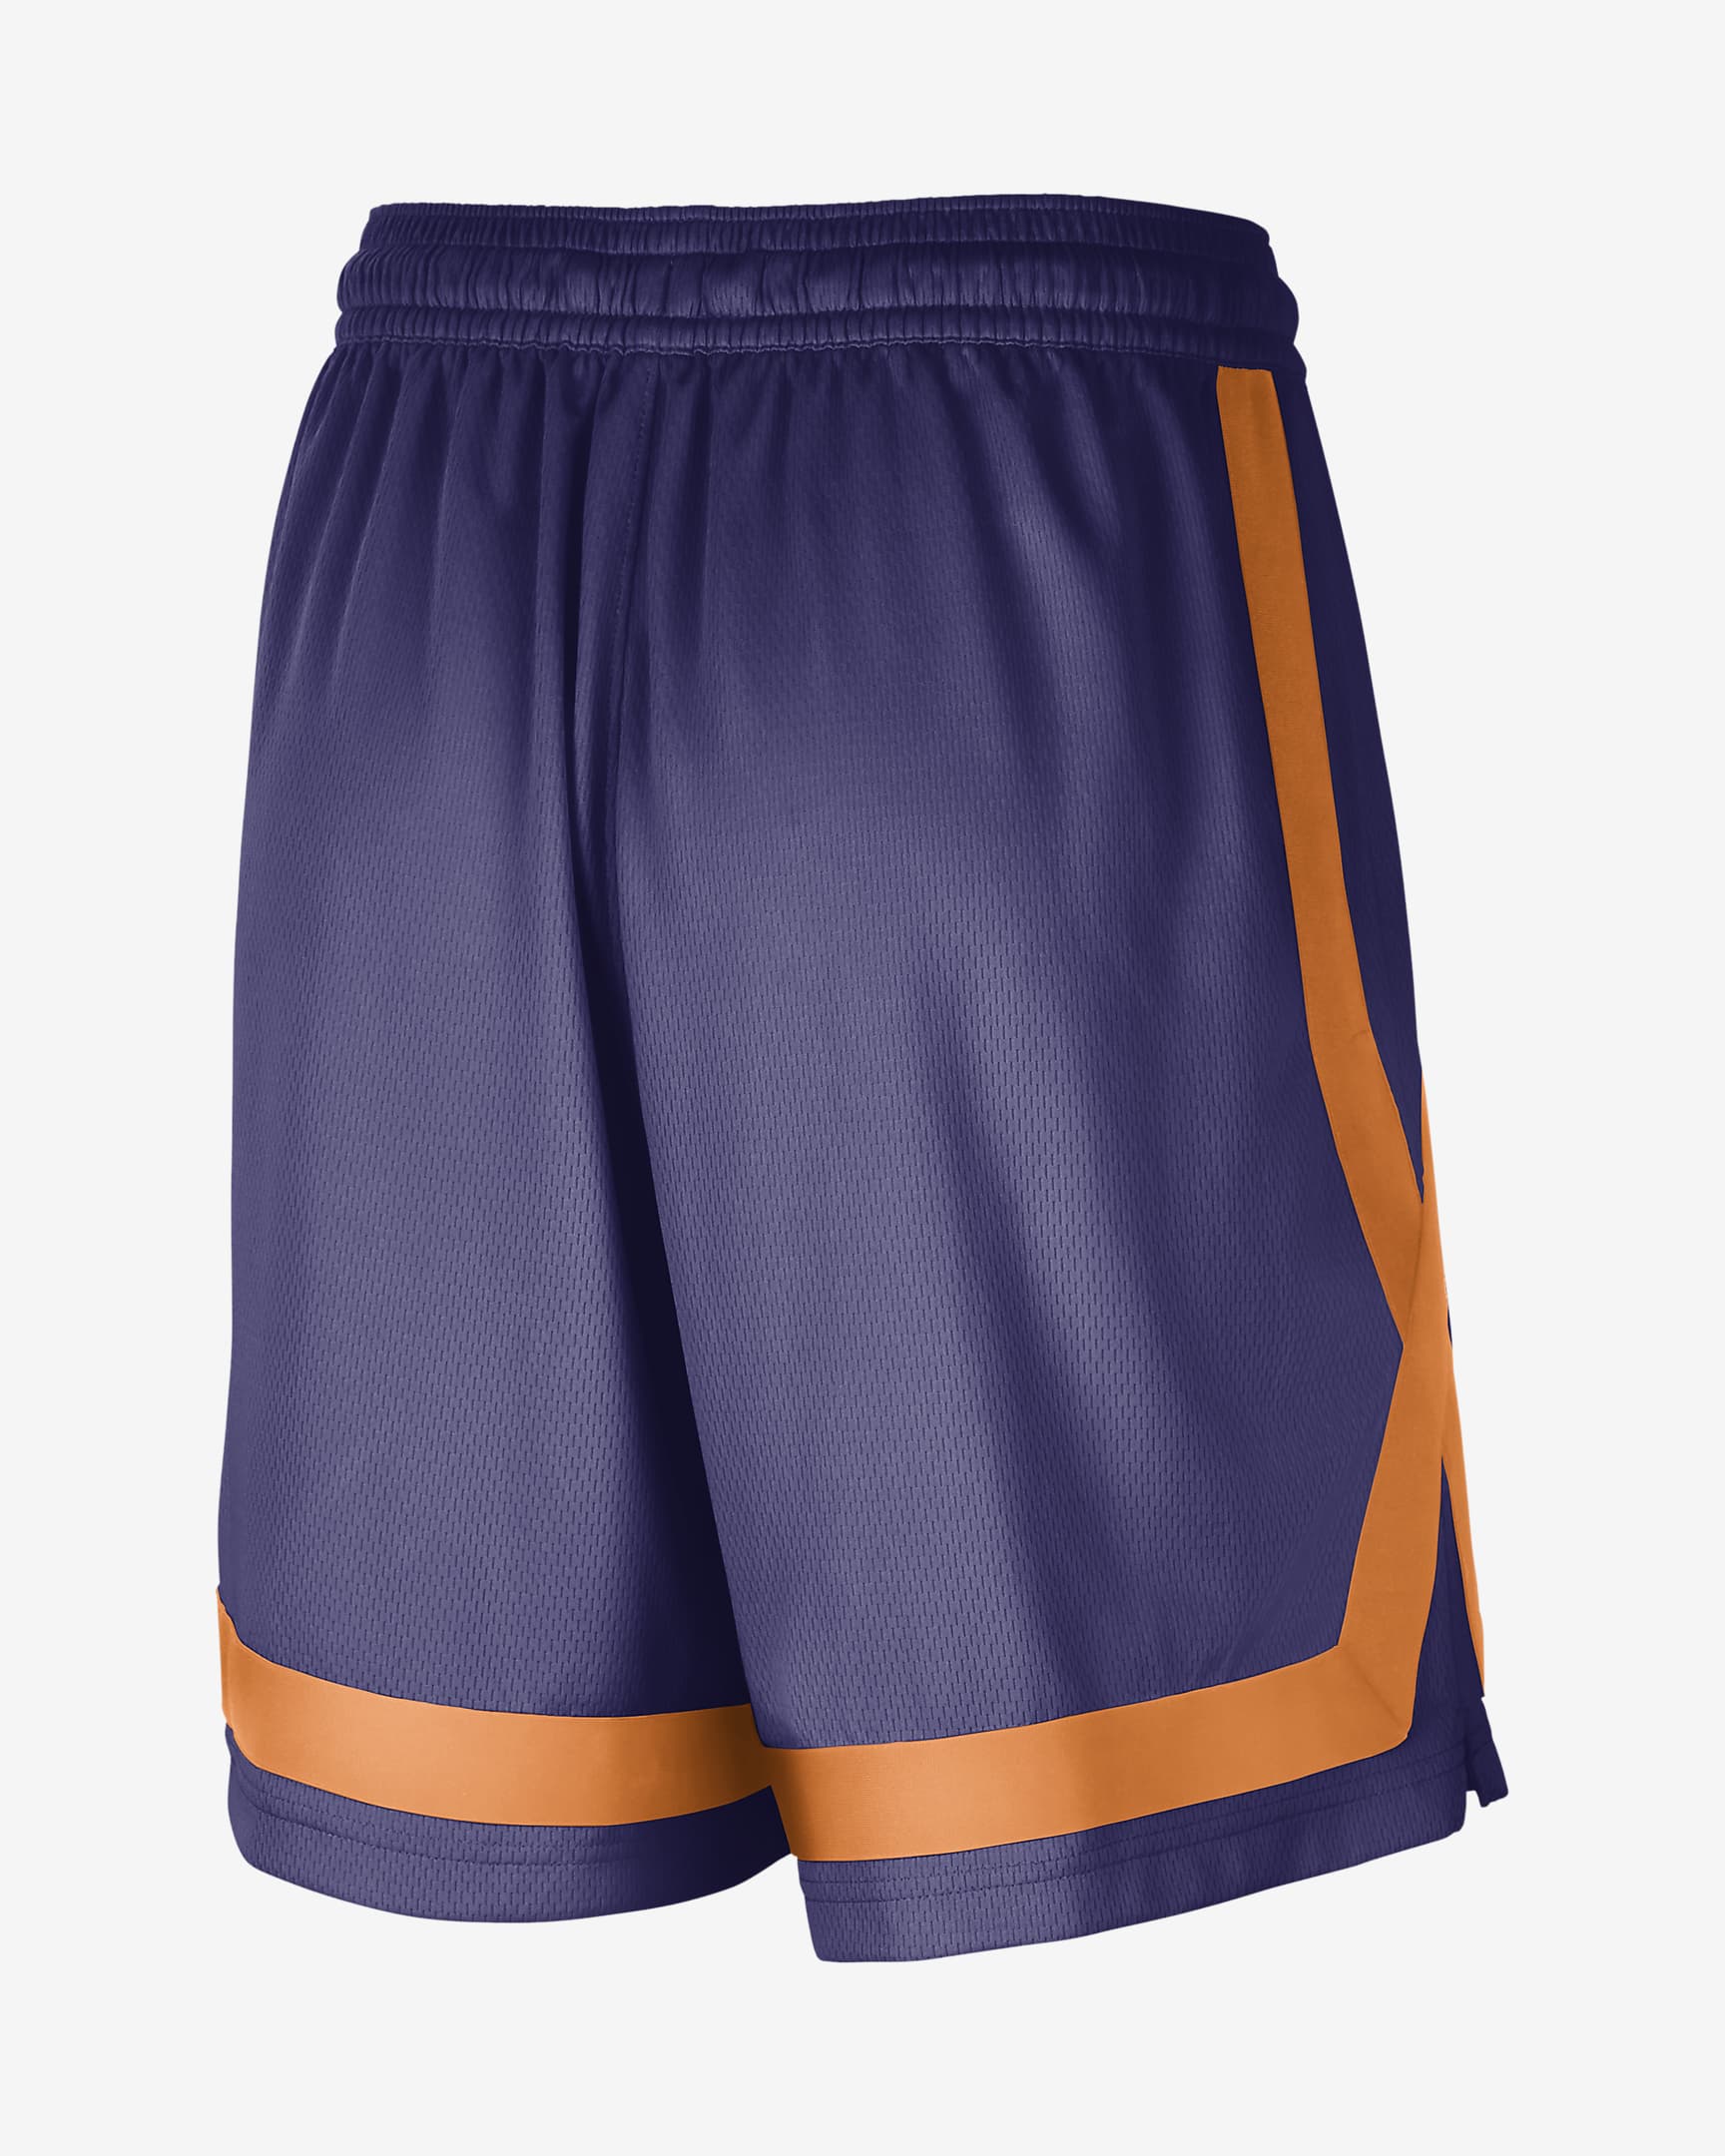 Phoenix Mercury Women's Nike WNBA Practice Shorts. Nike.com